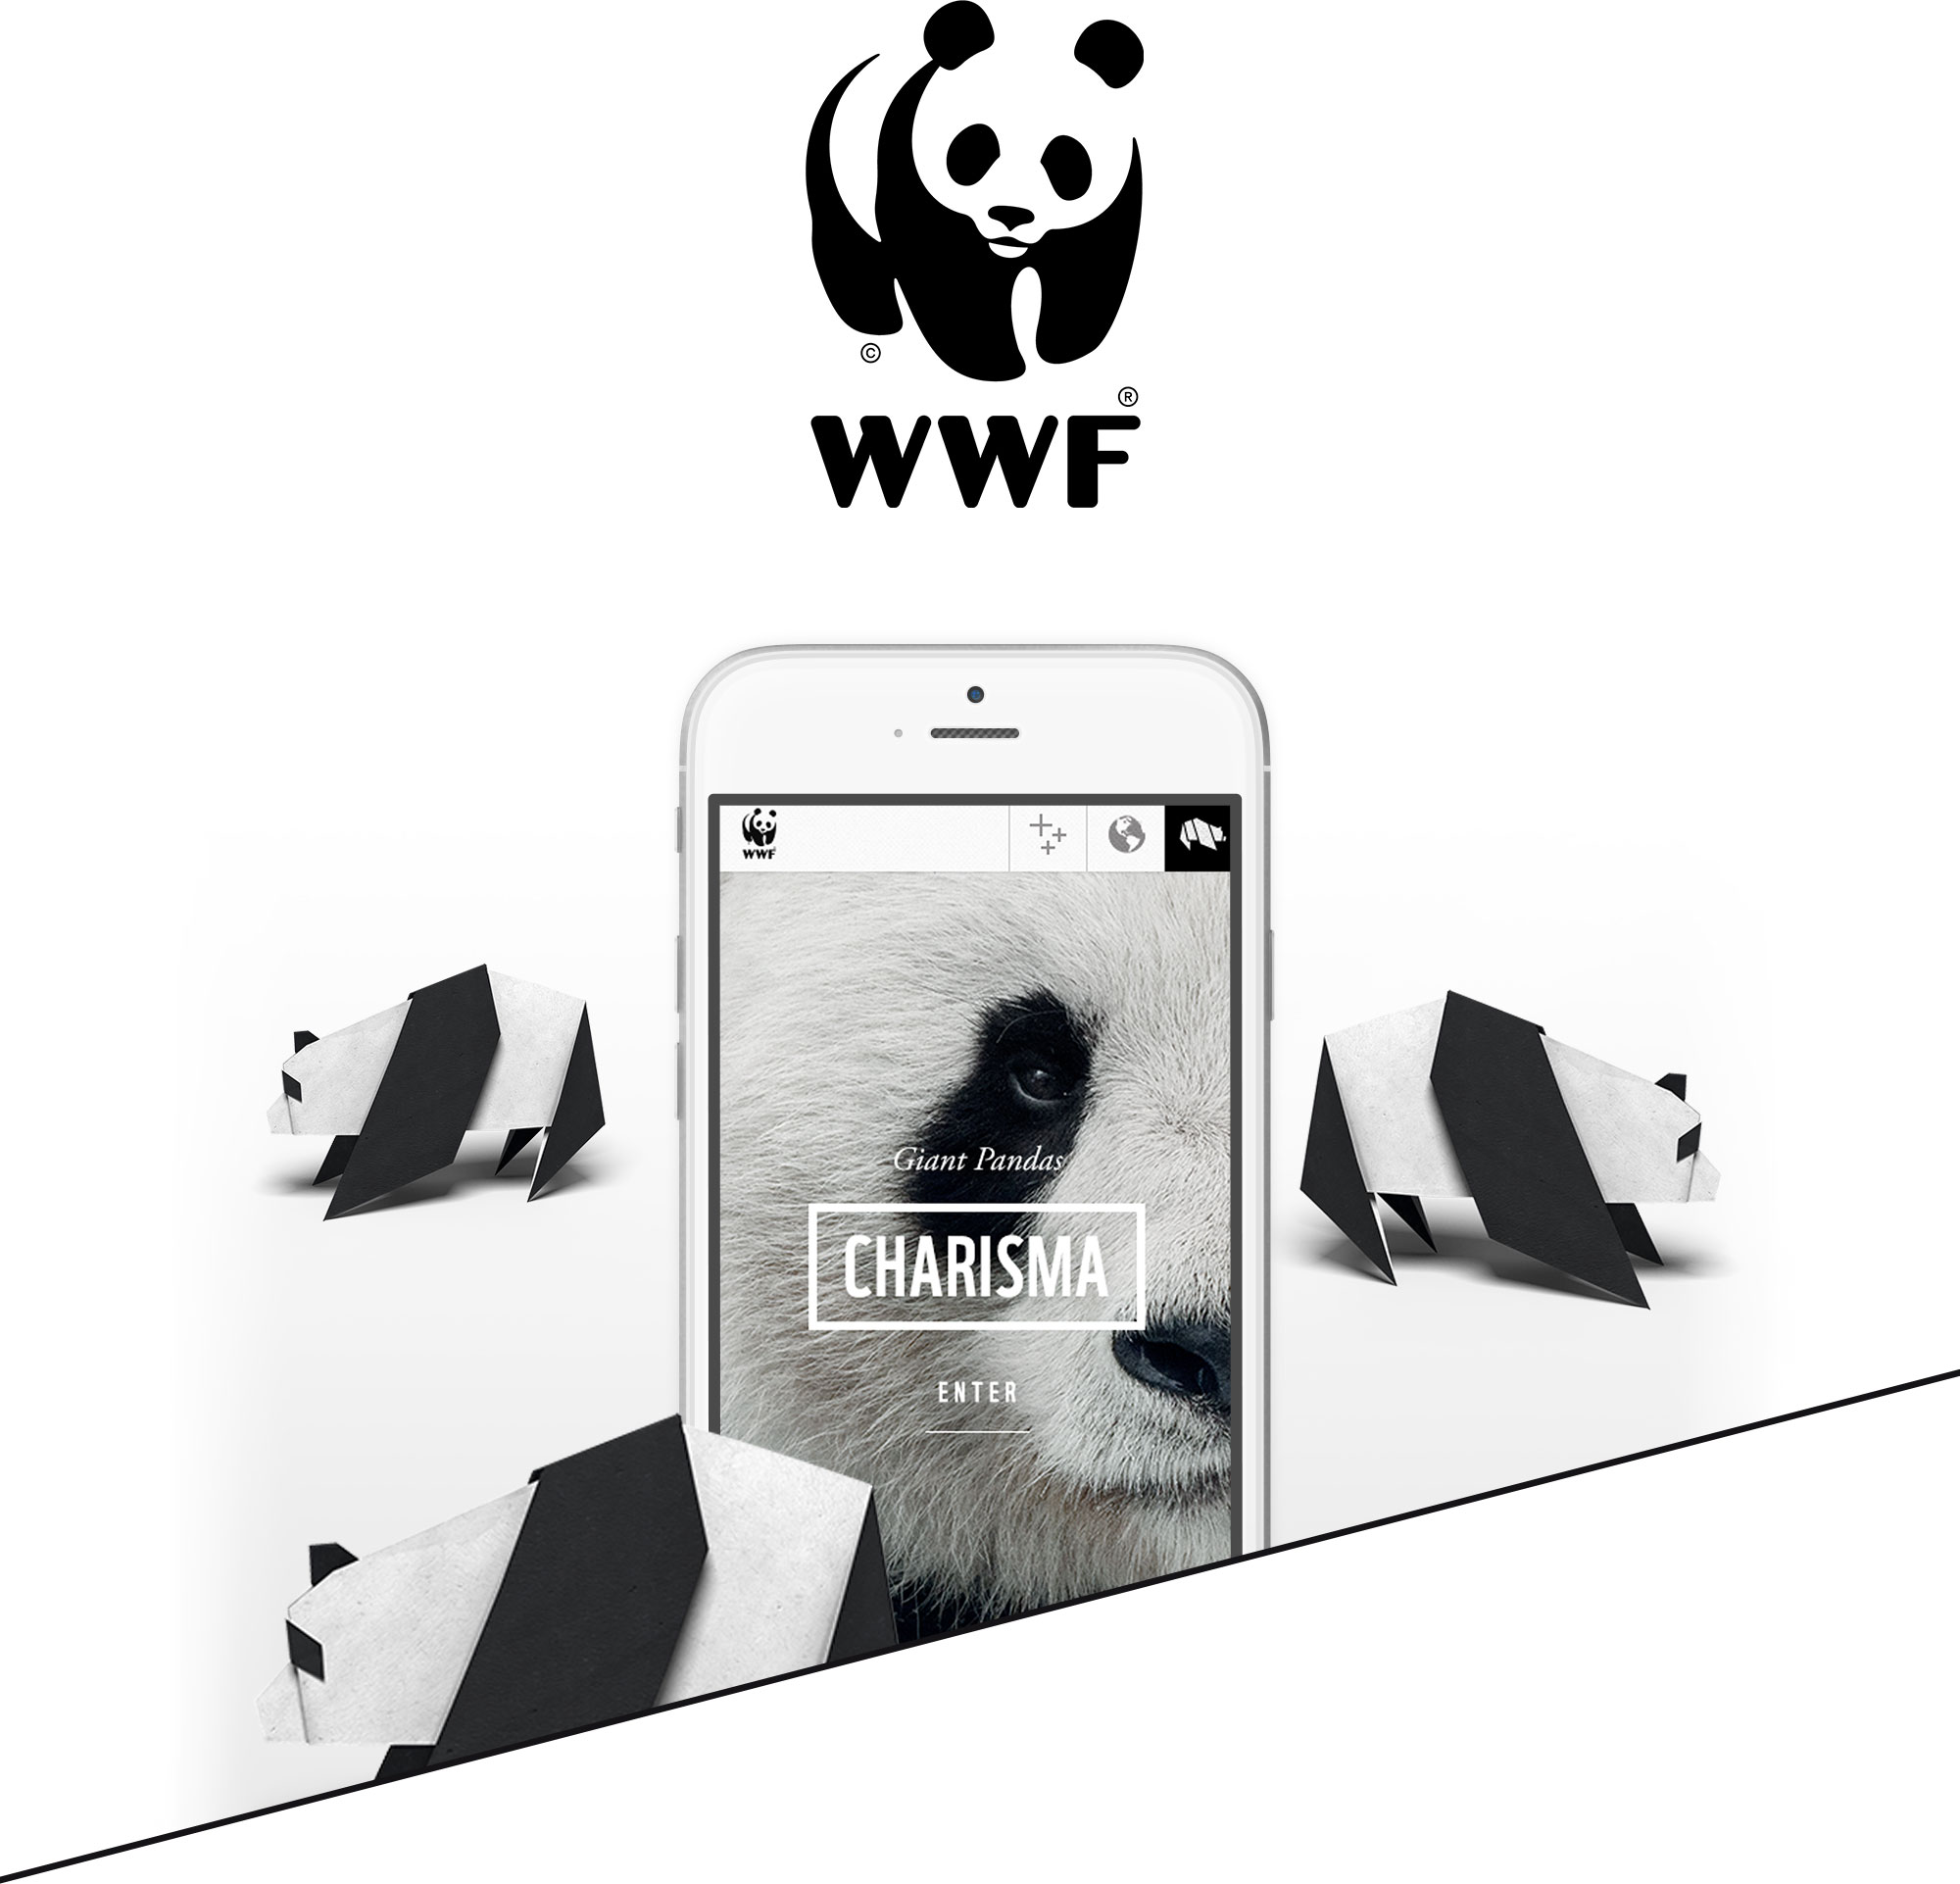 WWF case study by Tendigi